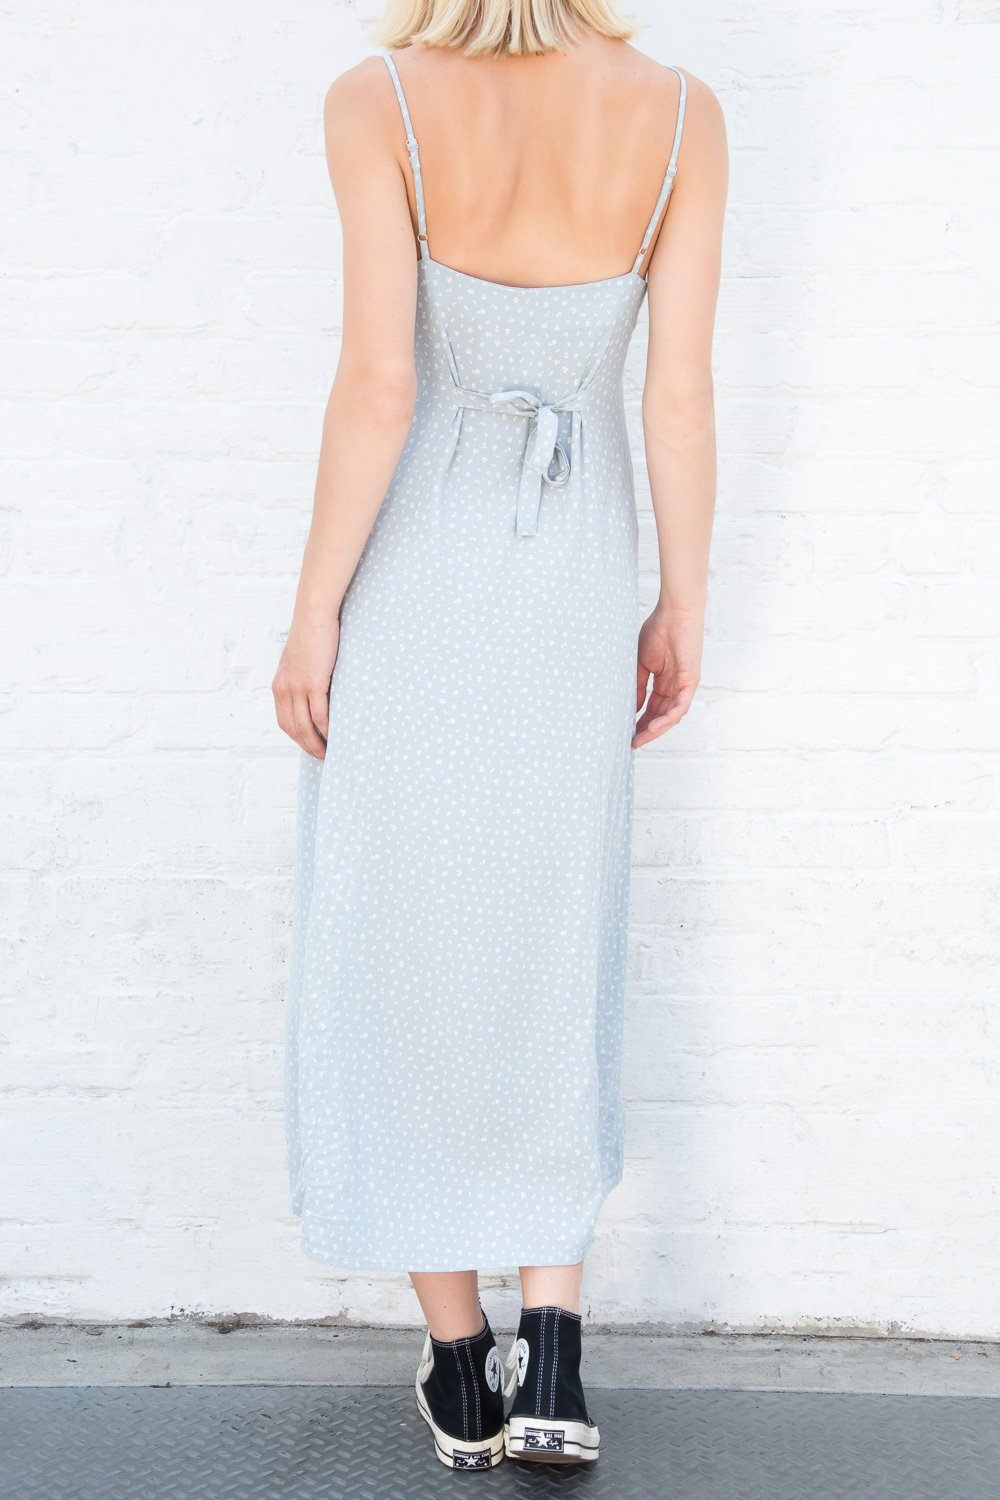 Brandy Melville Colleen midi floral slip dress Multi - $28 - From Bri